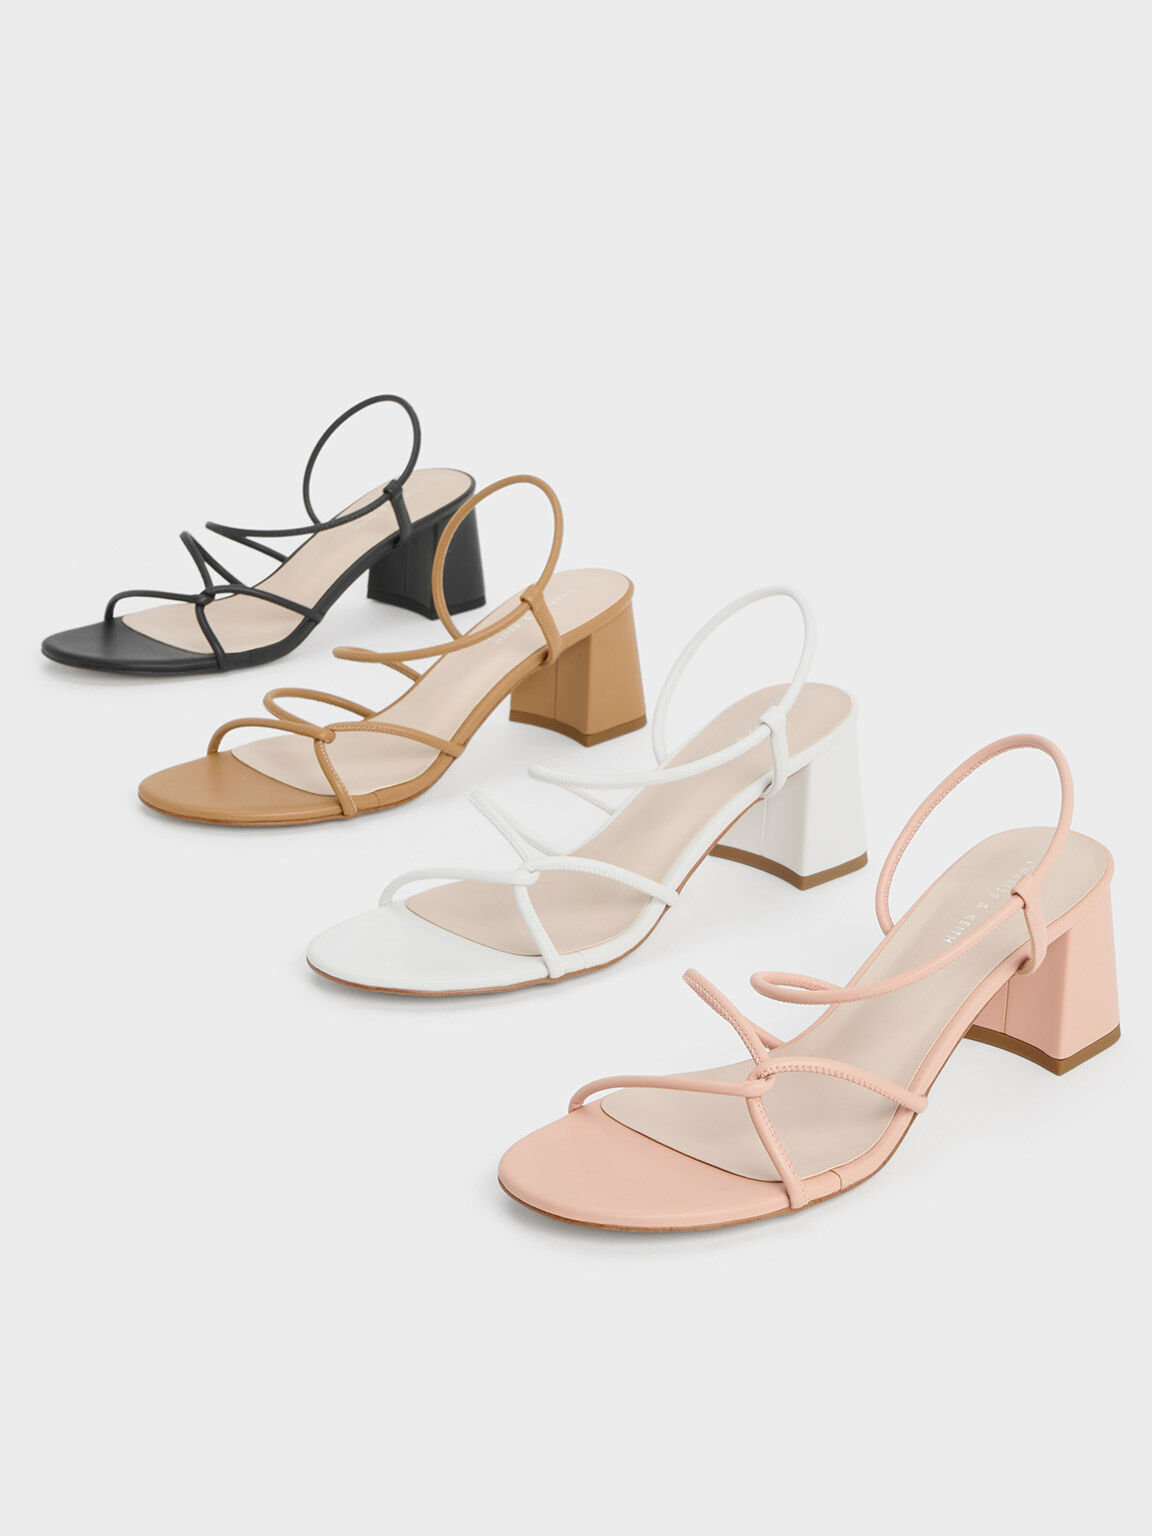 Public Desire Pink Pointed Toe Stiletto Heel Sandals | New Look